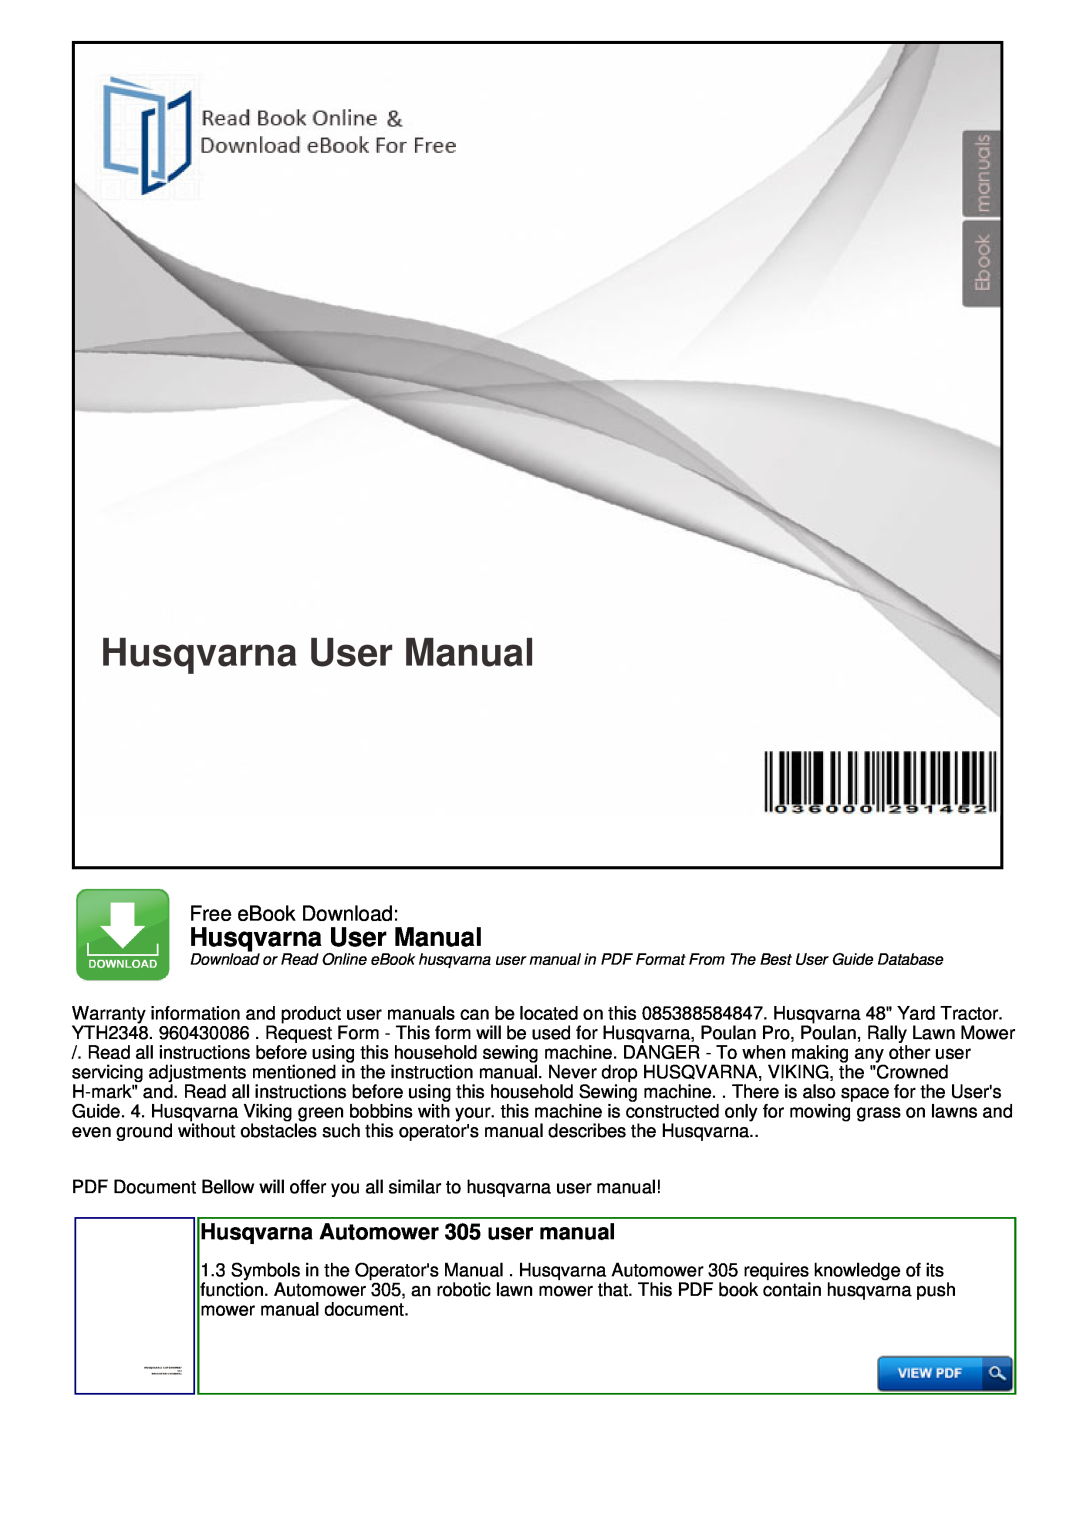 Husqvarna YTH2348 user manual Husqvarna User Manual, Free eBook Download 